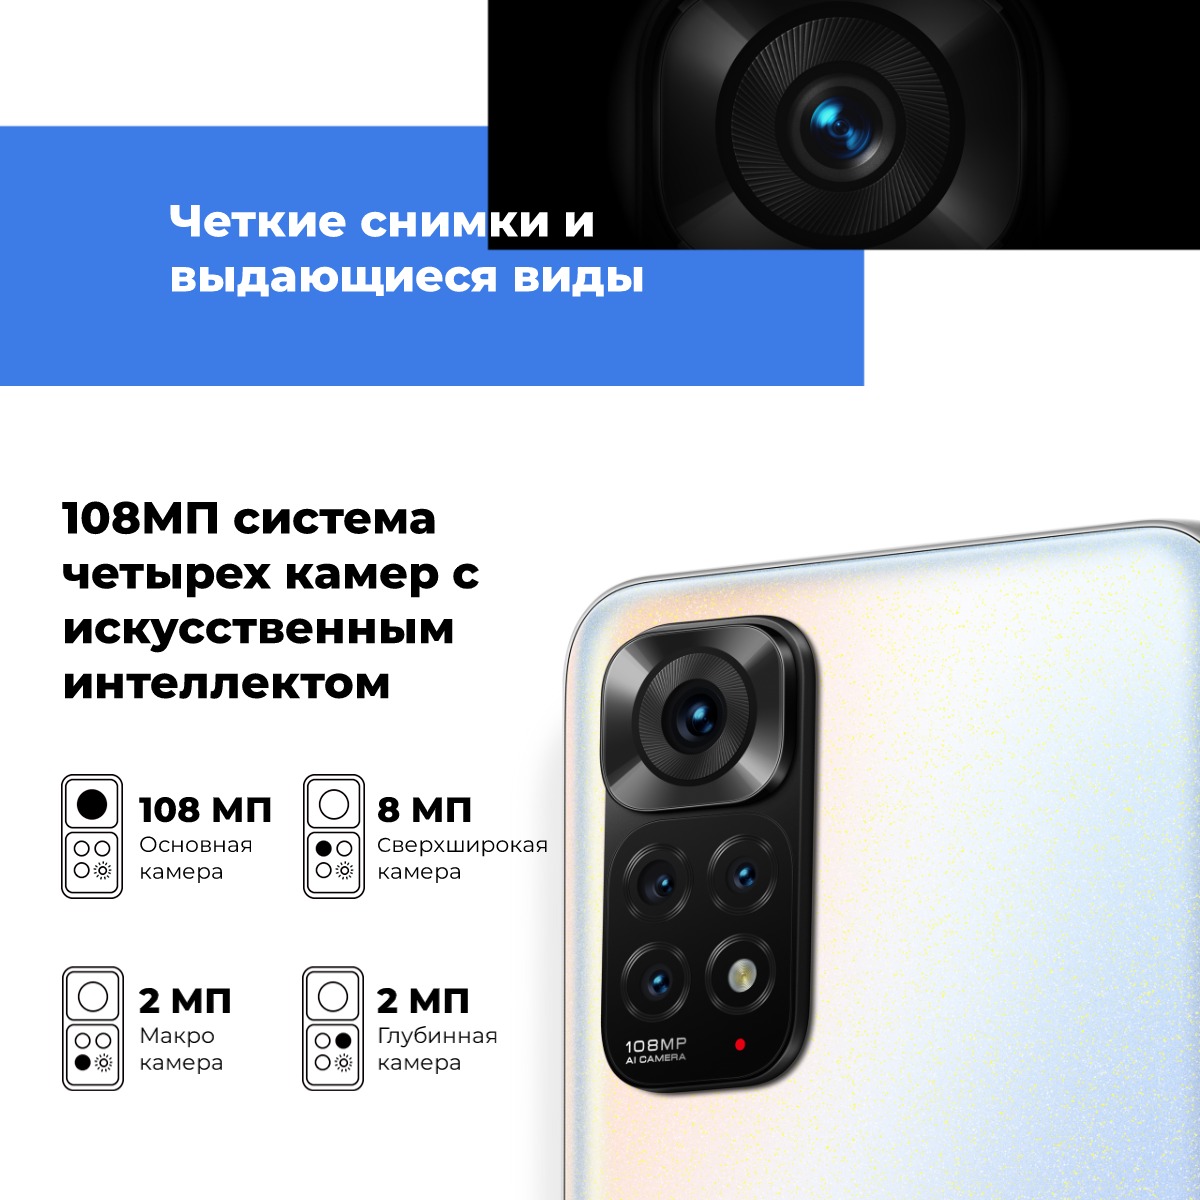 Смартфон Redmi Note 11S 6/64Gb Blue Global